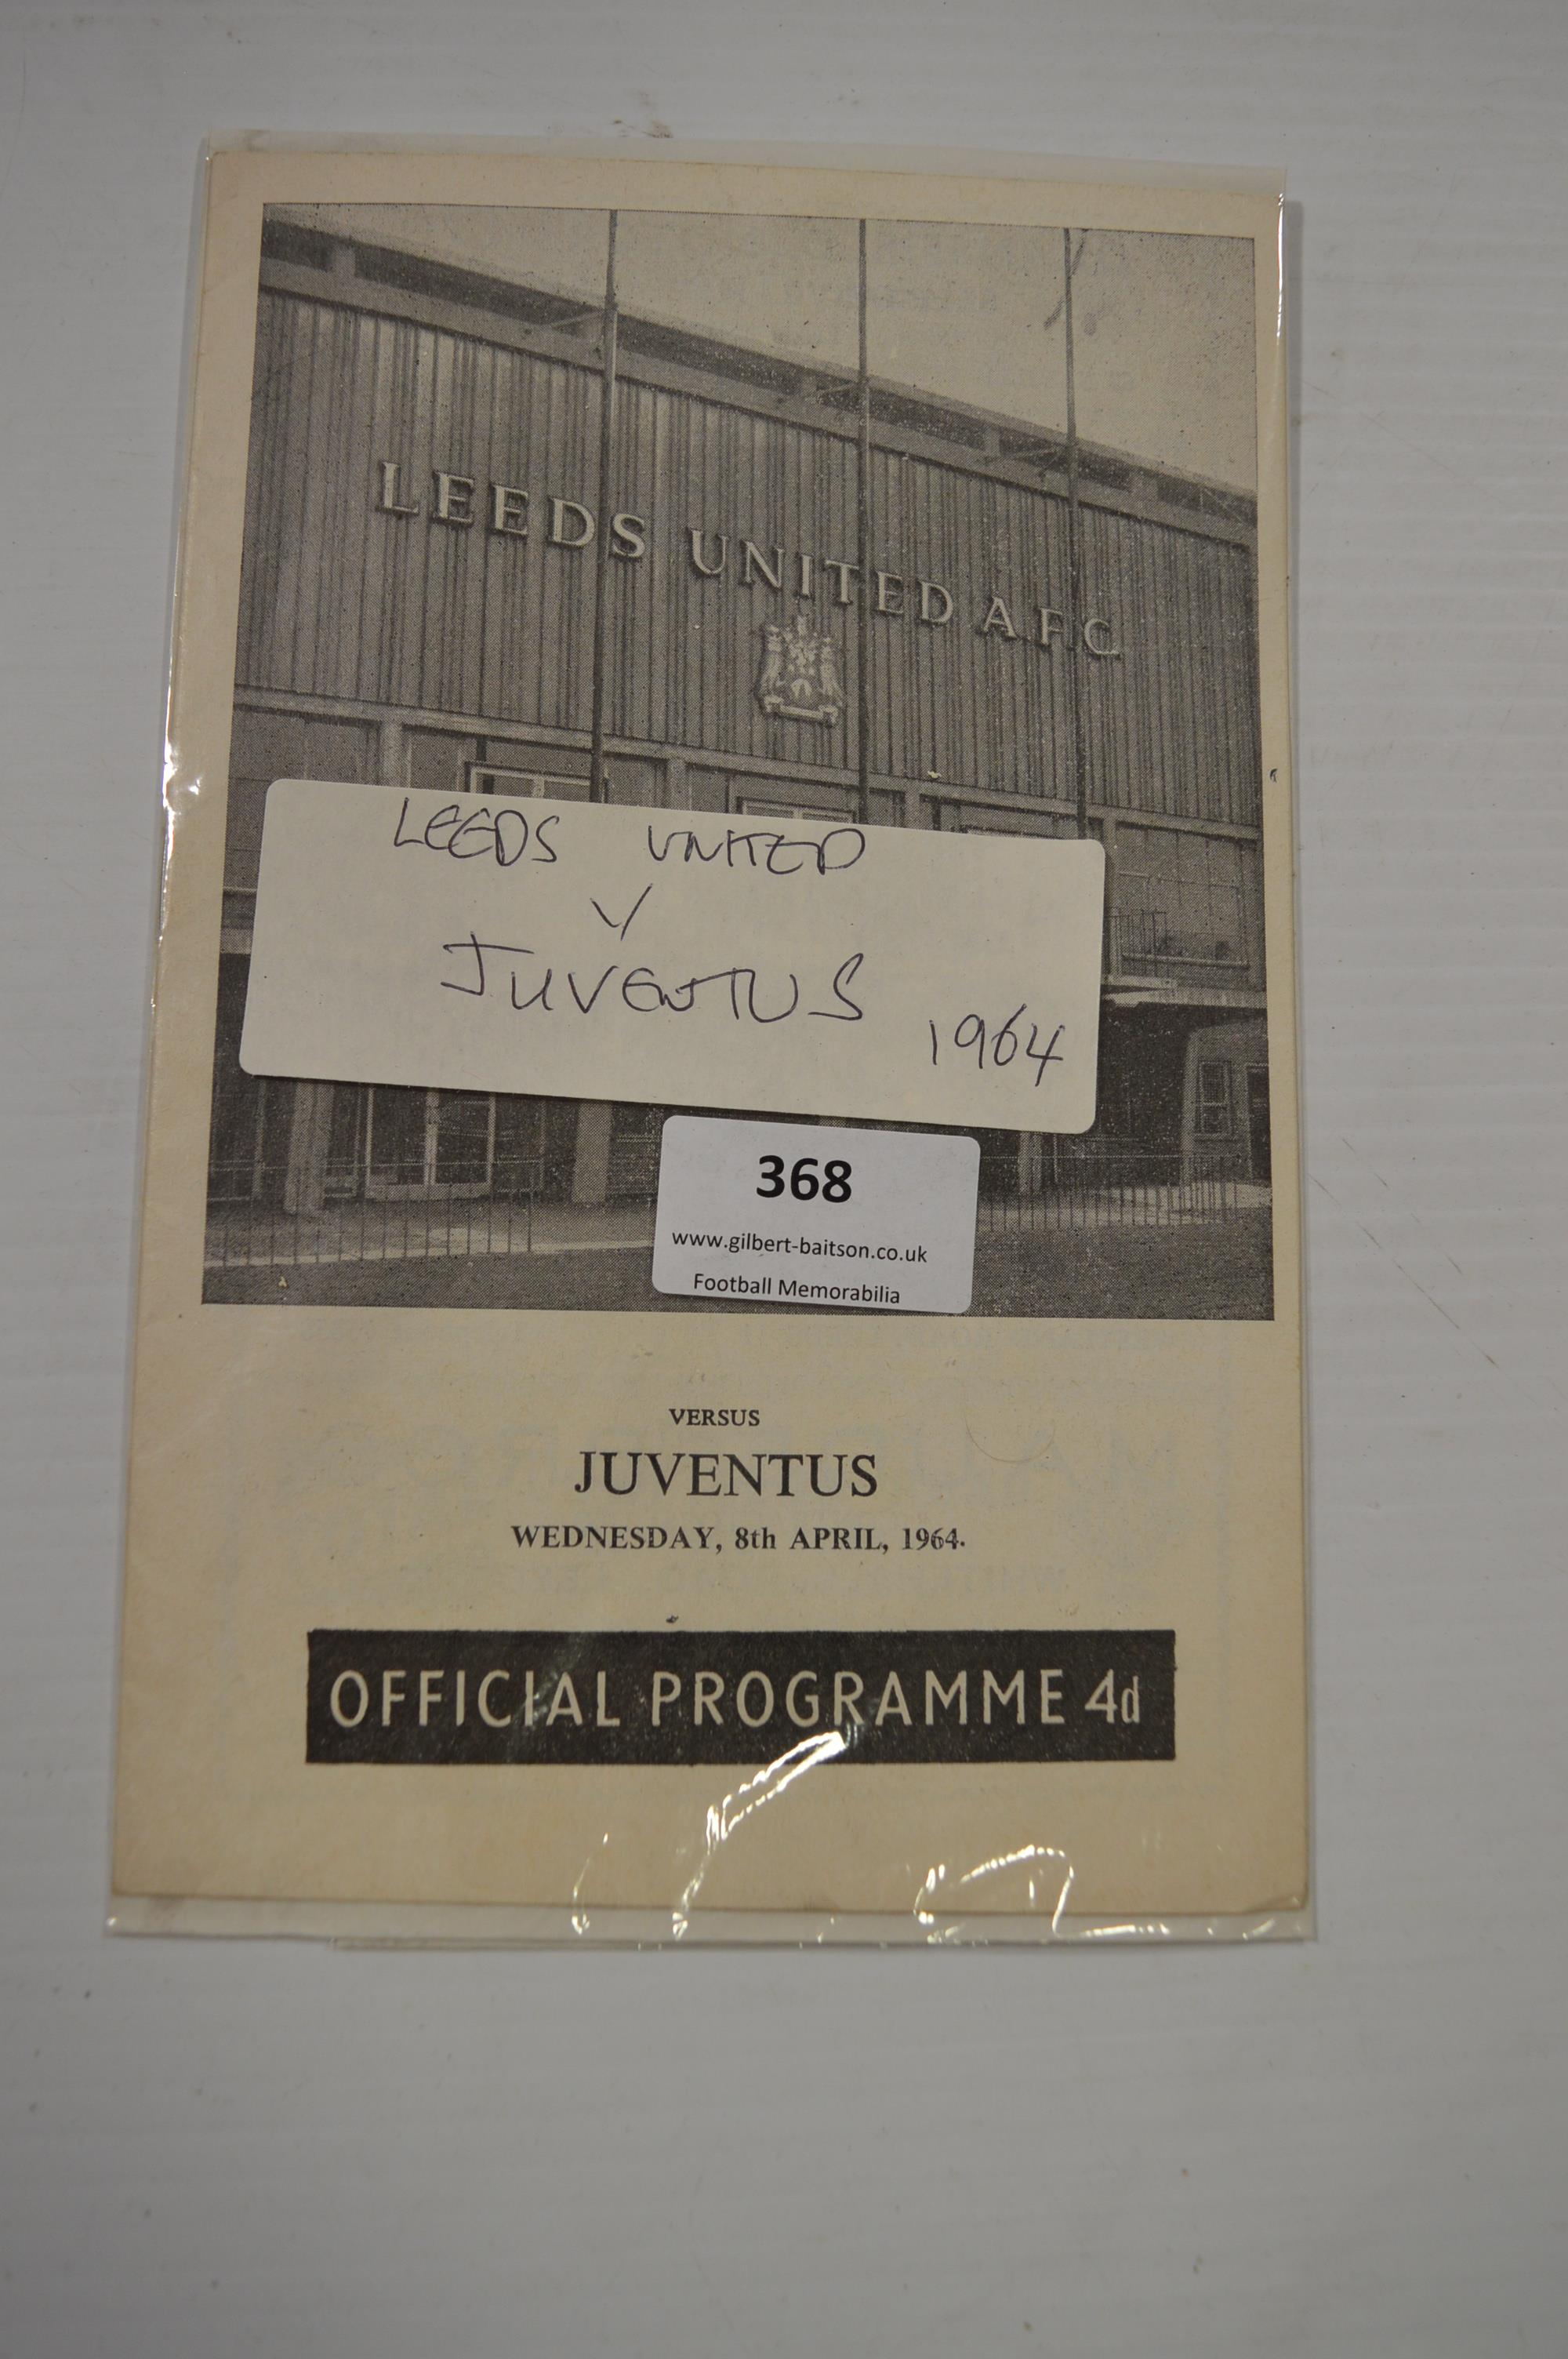 Leeds United vs Juventus 1964